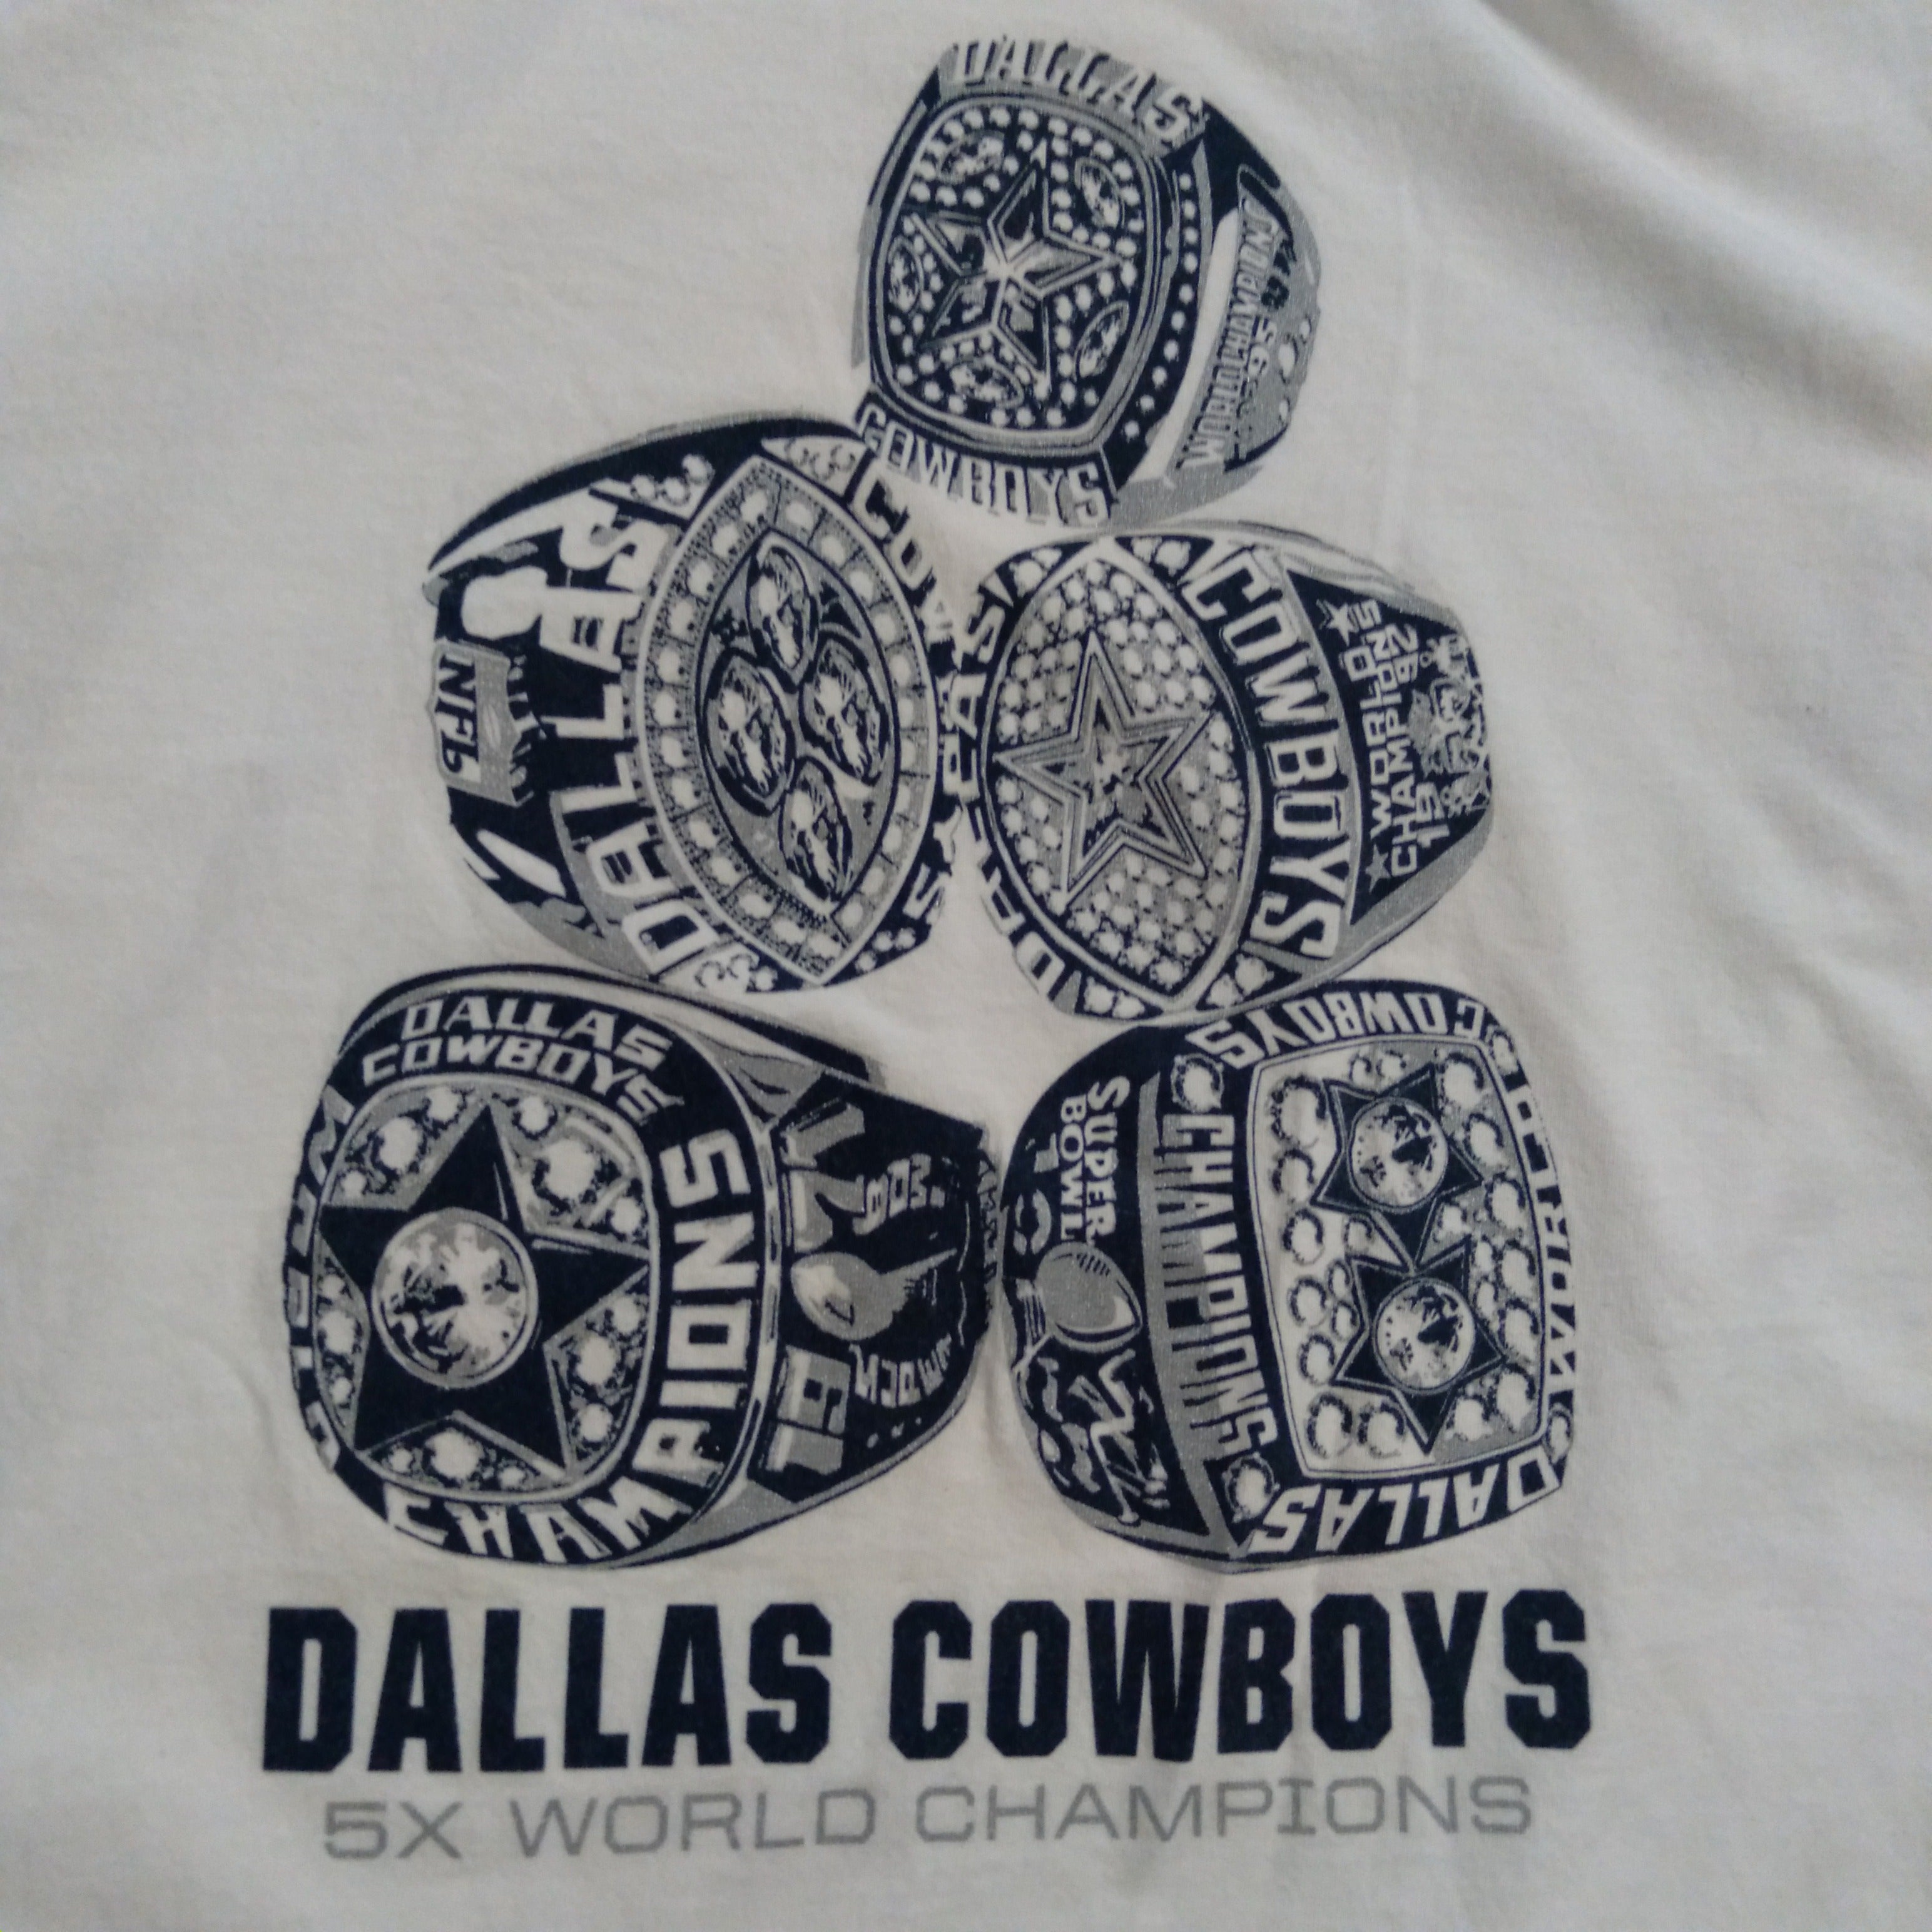 Dallas Cowboys Authentic 5x Champs Graphic Print White T-Shirt XXL